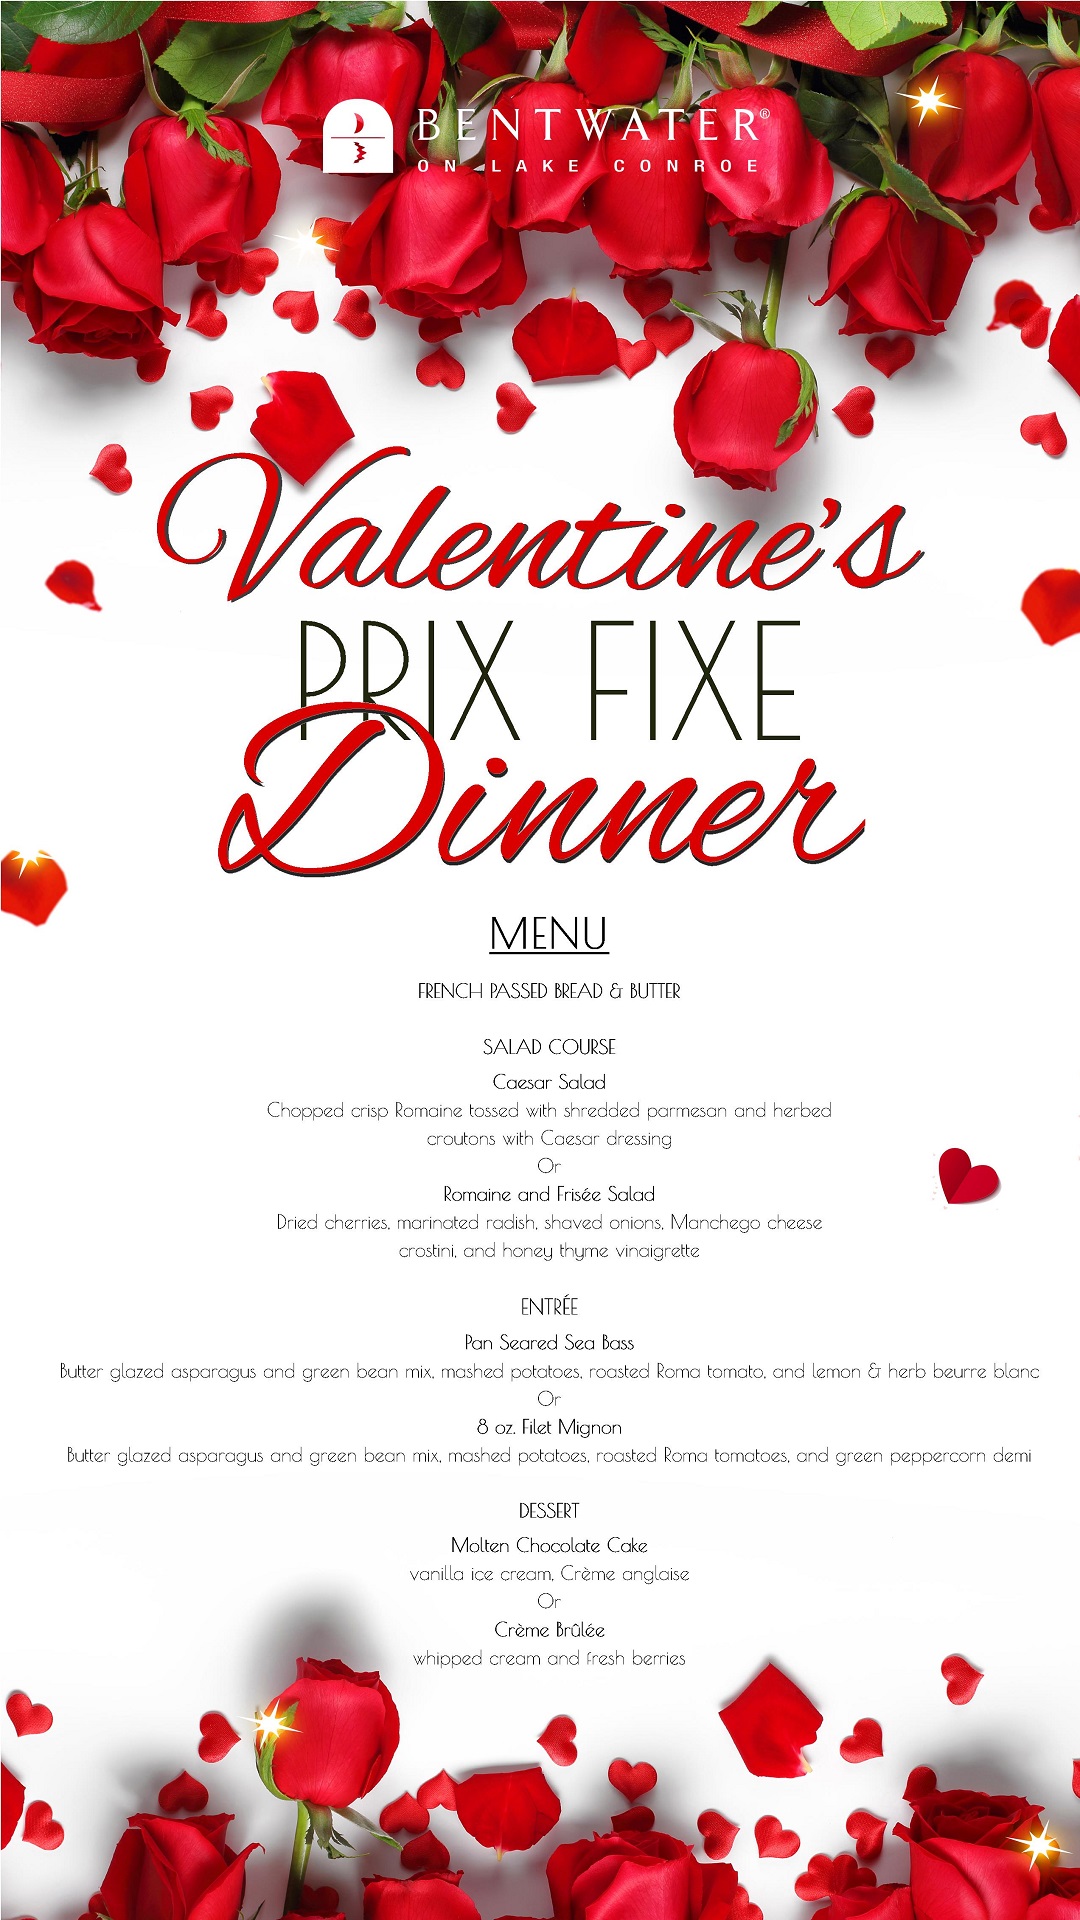 Bentwater Yacht & Country Club Calendar Event Valentine's Prix Fixe